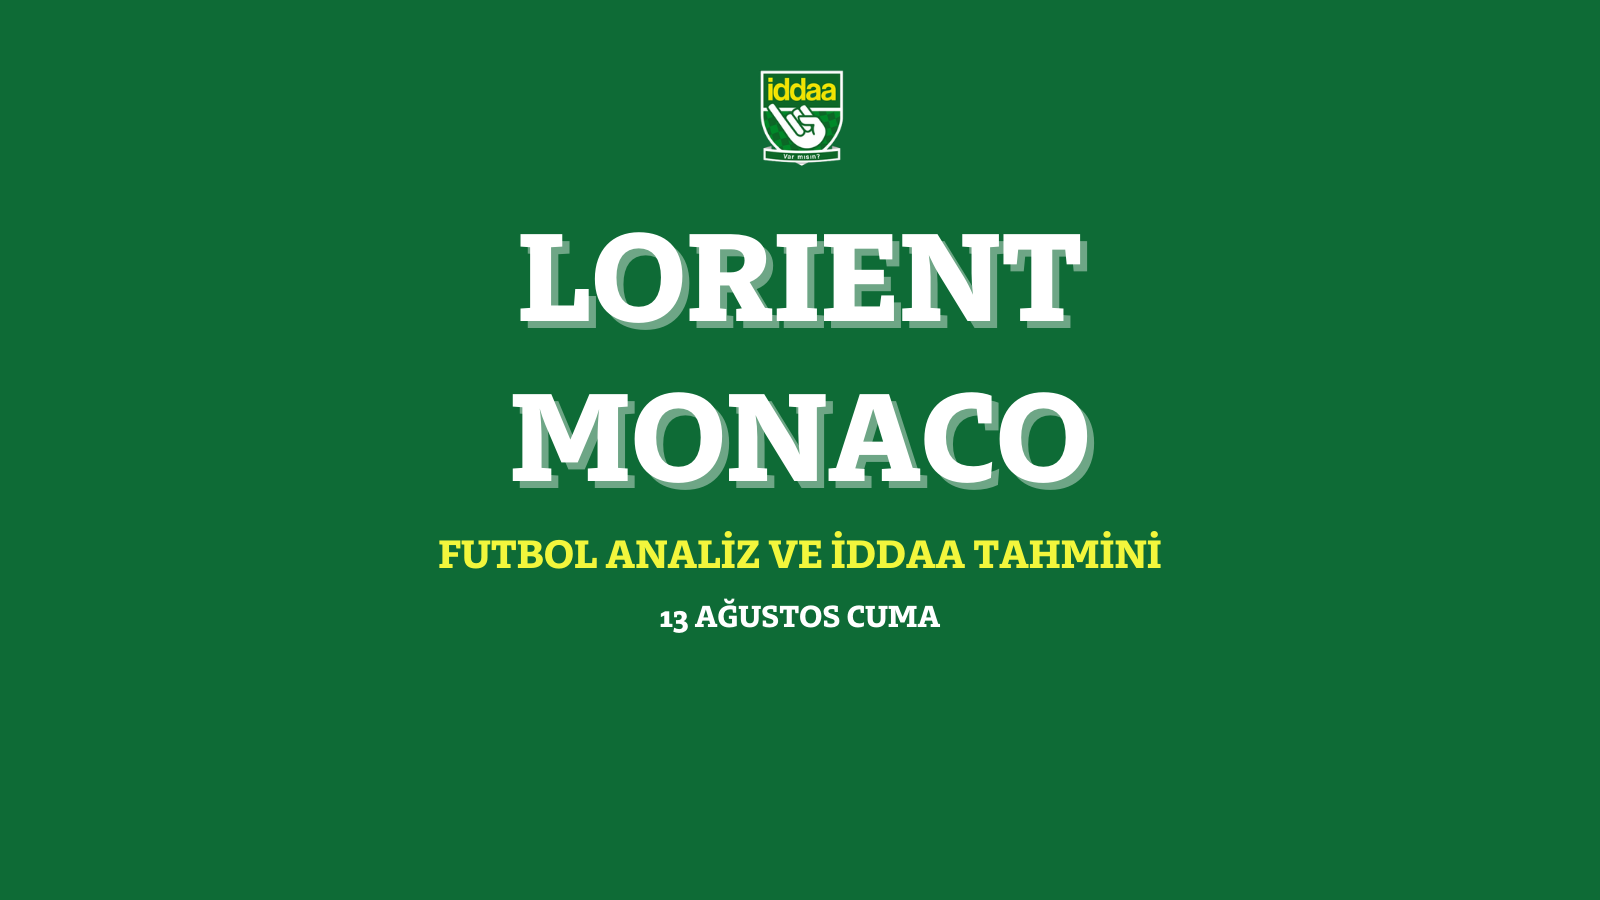 13 Ağustos Cuma 2021 Lorient - Monaco iddaa tahmin ve analizi